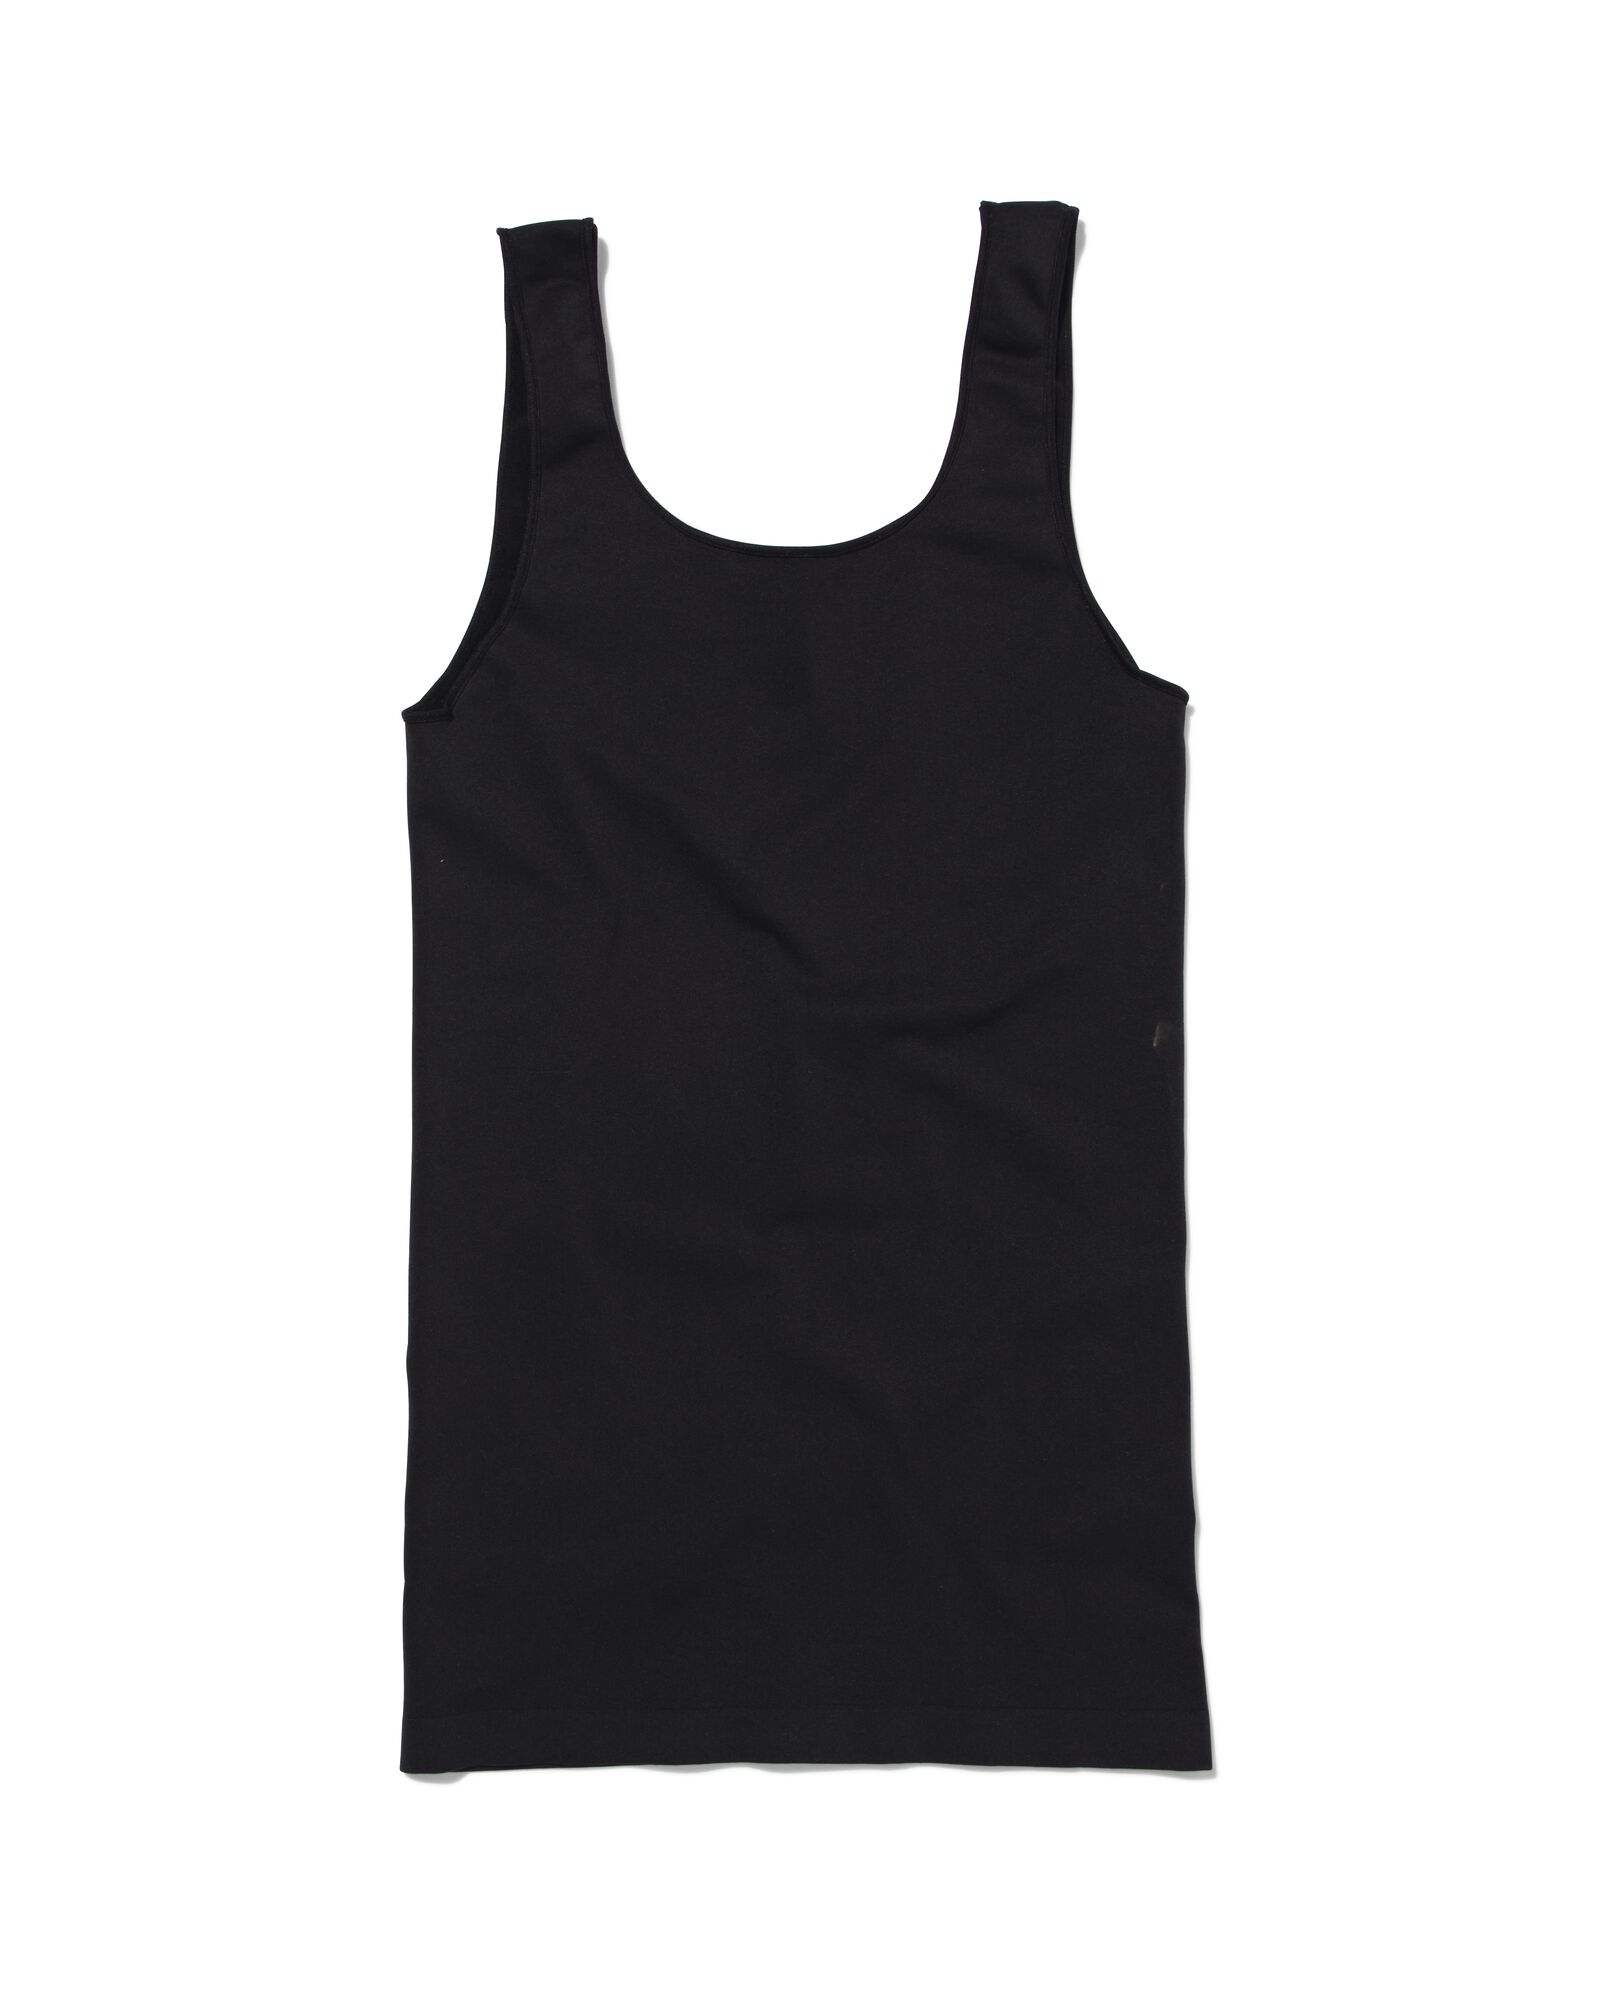 Hemd, Damen schwarz schwarz - 1000002077 - HEMA